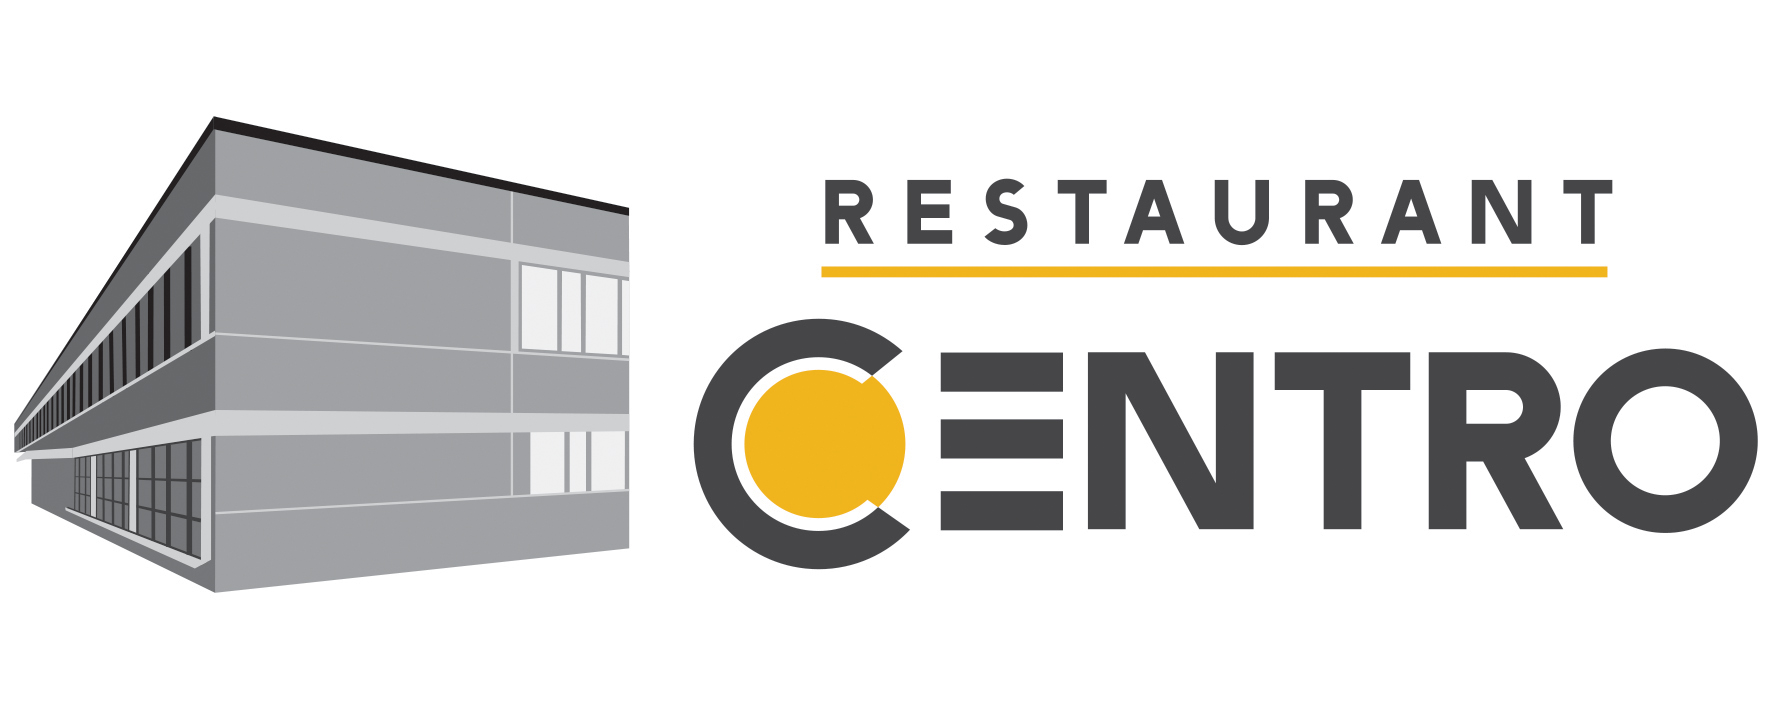 Restaurant Centro logo